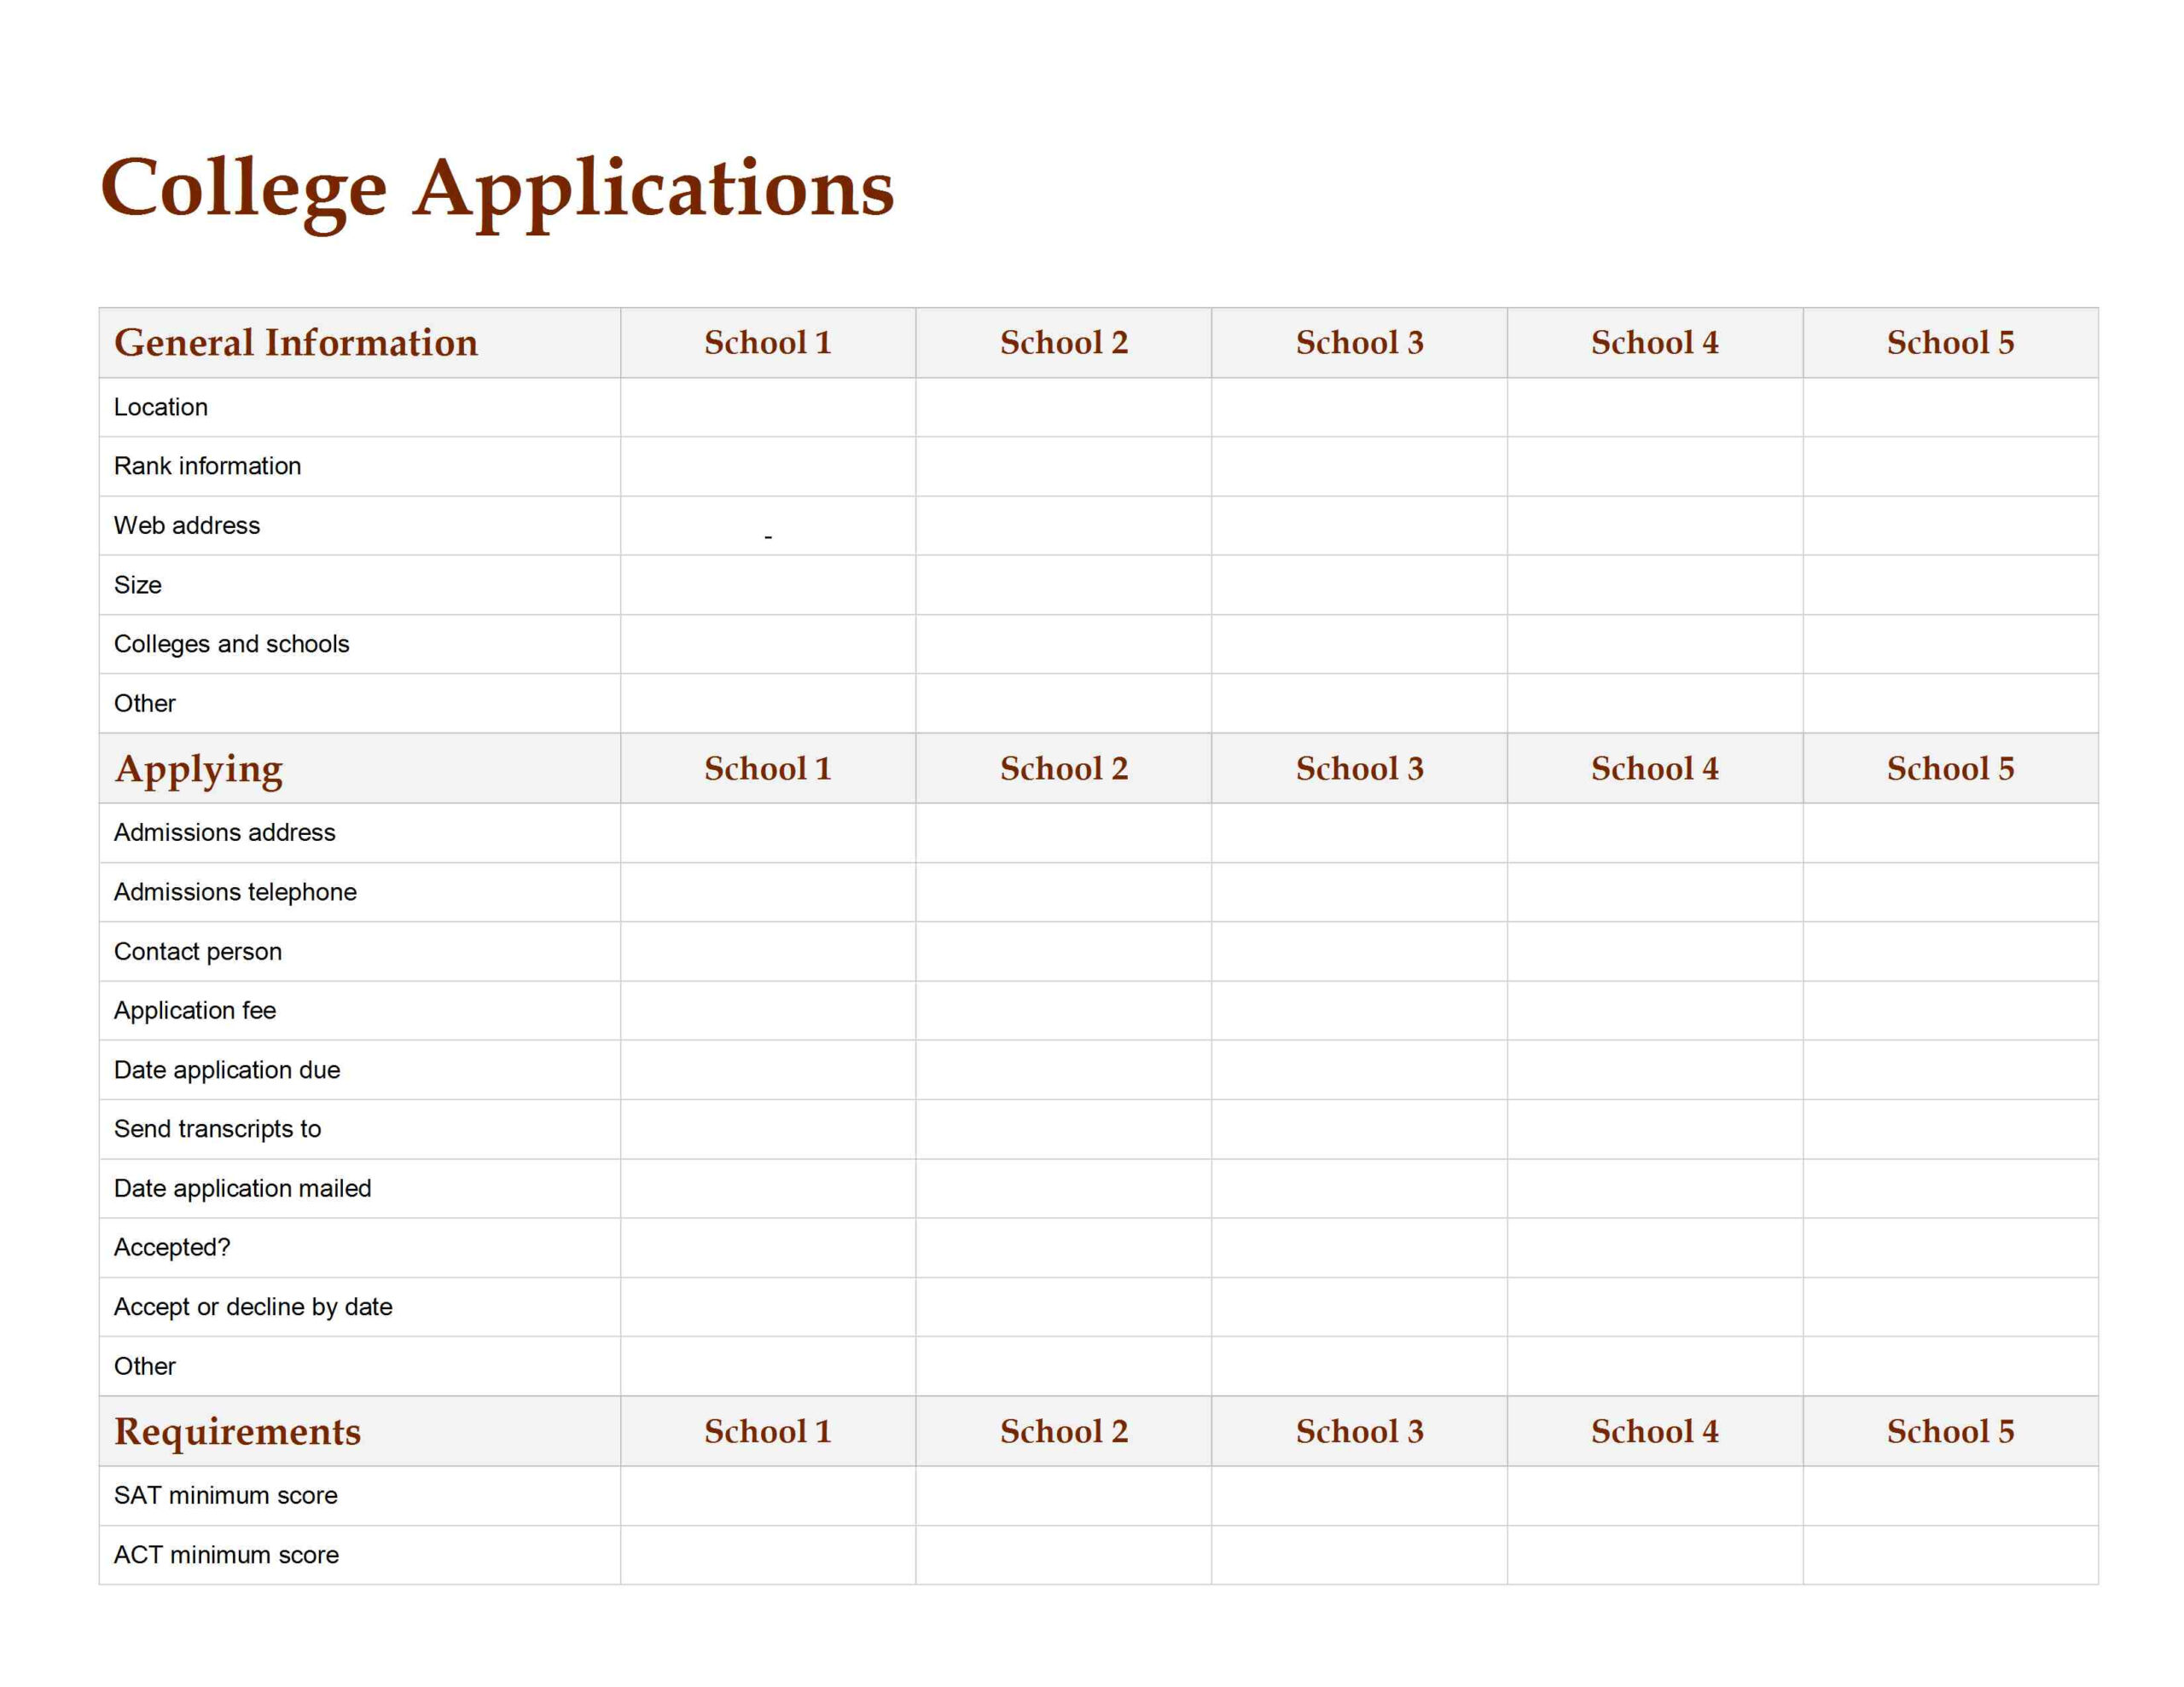 College Application Checklist Template Regarding College Application Checklist Template Throughout College Application Checklist Template